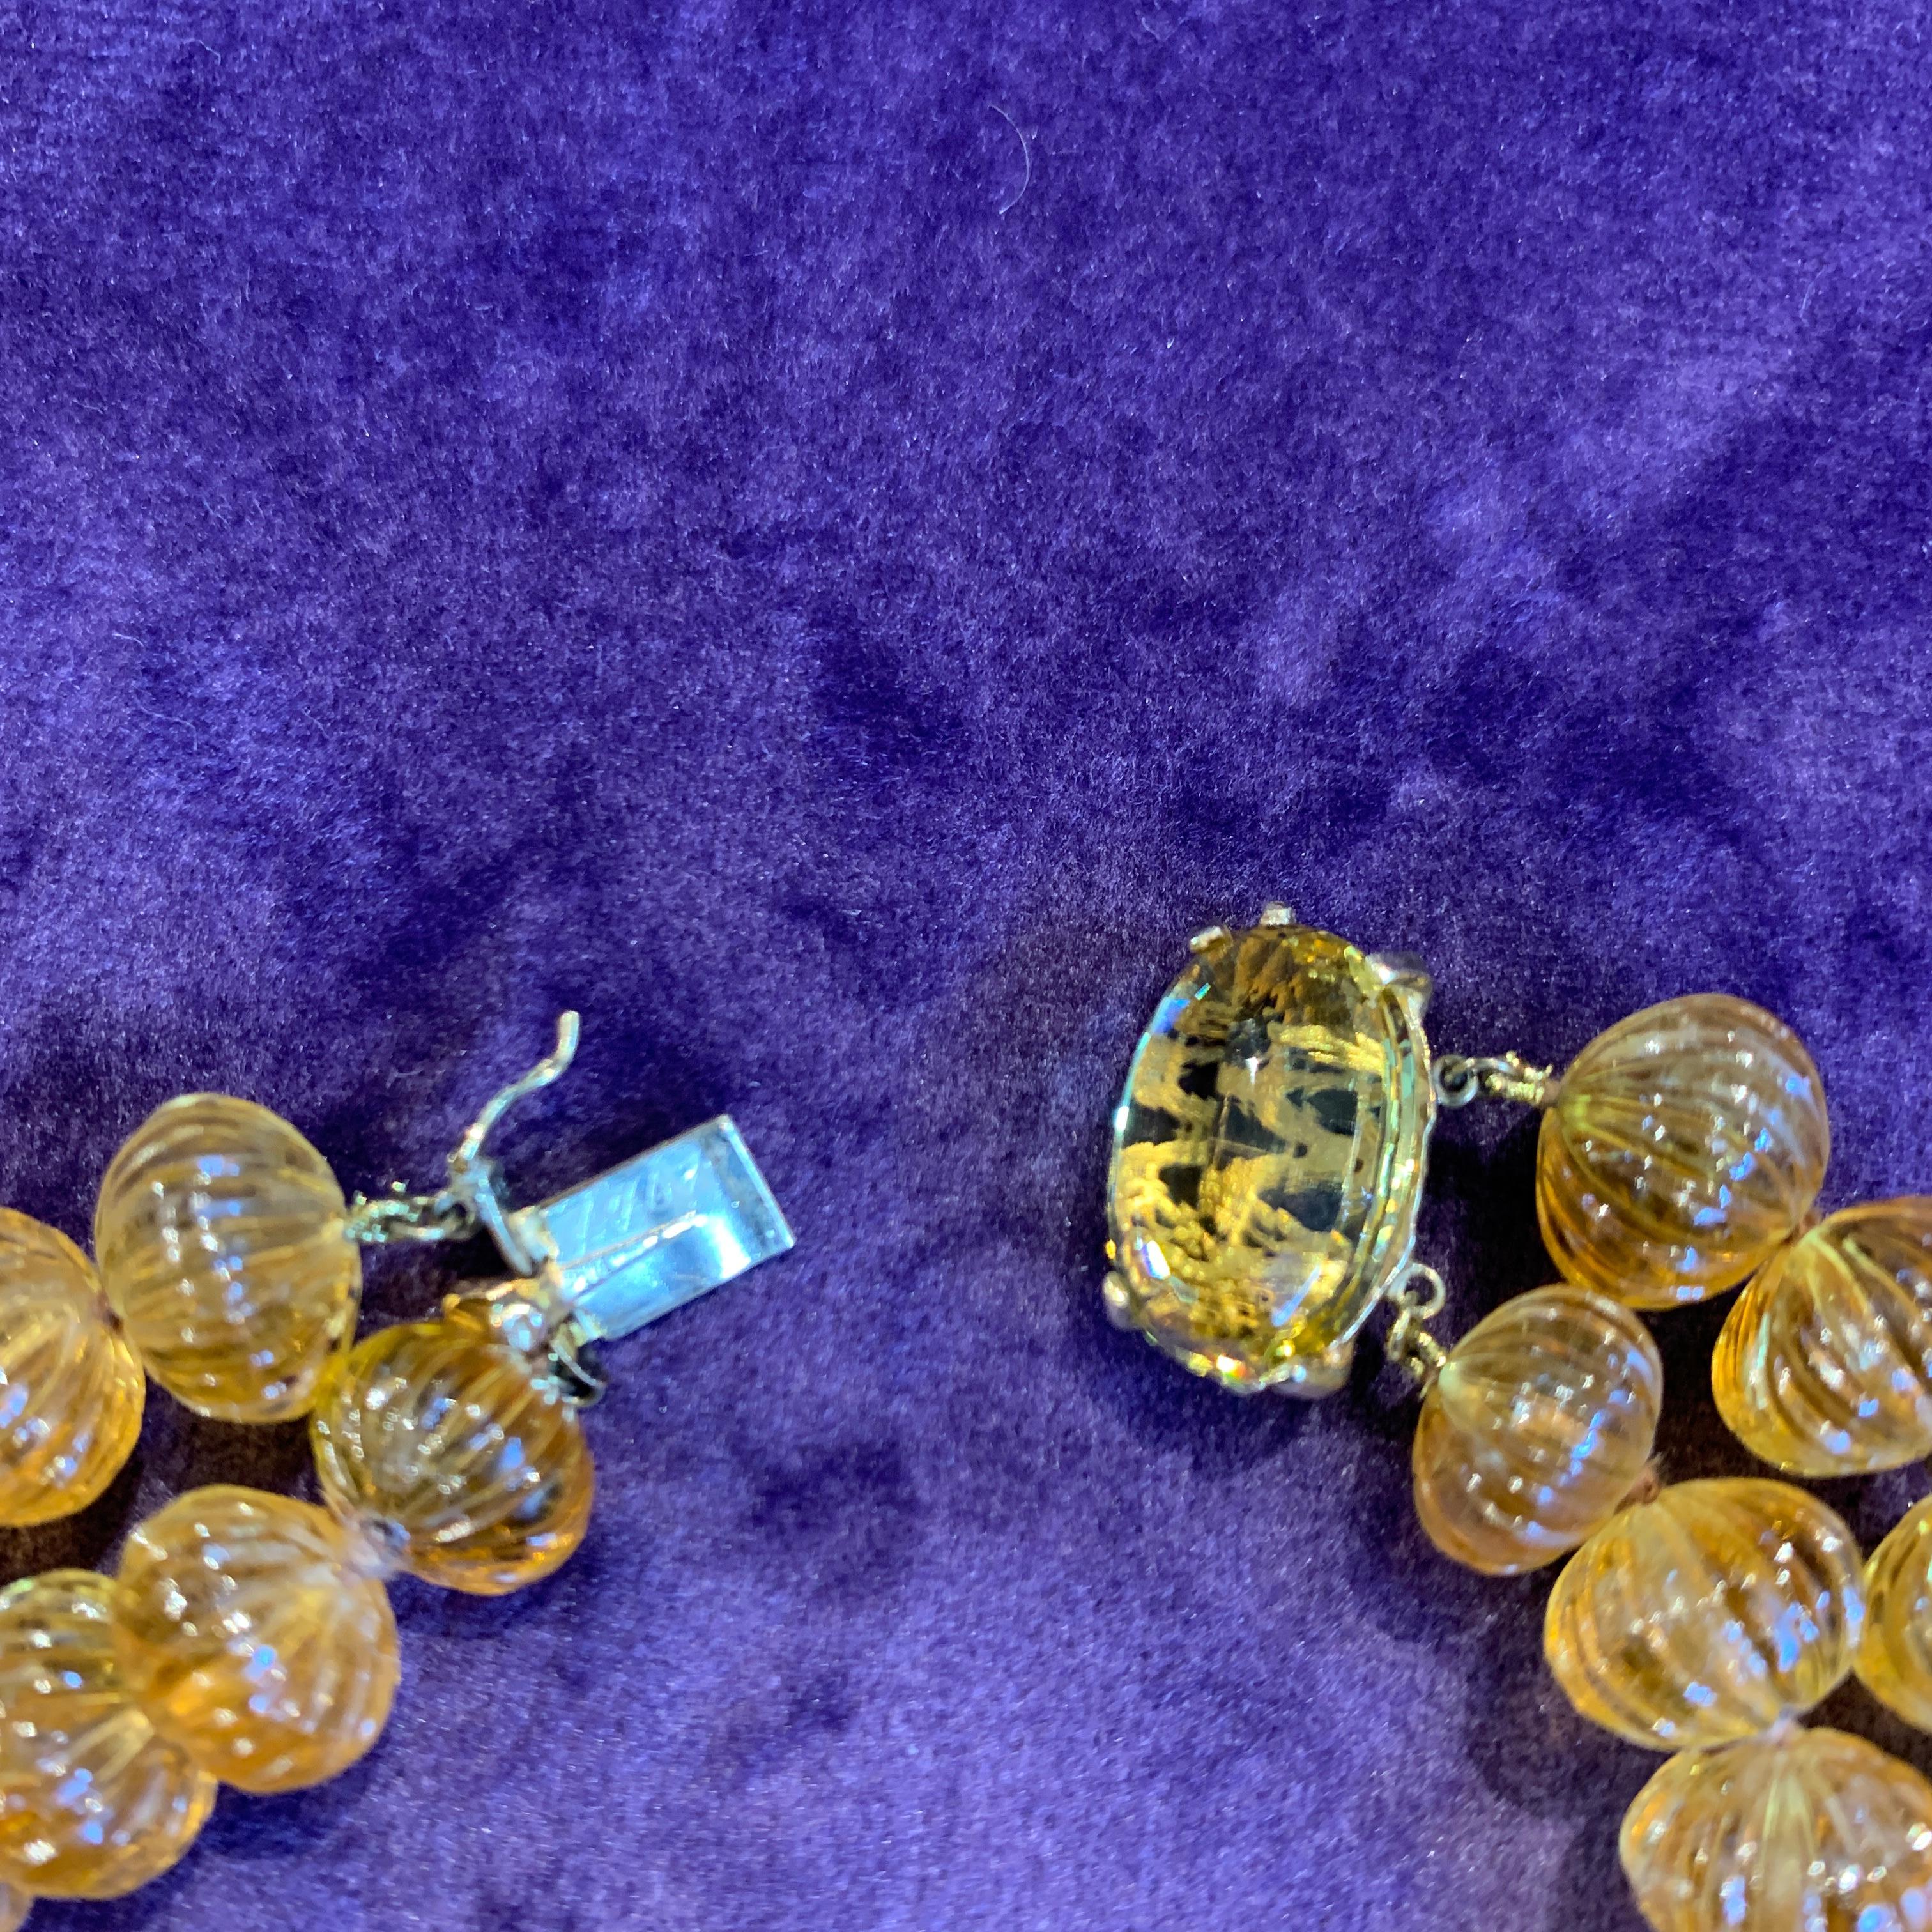 citrine beads necklace